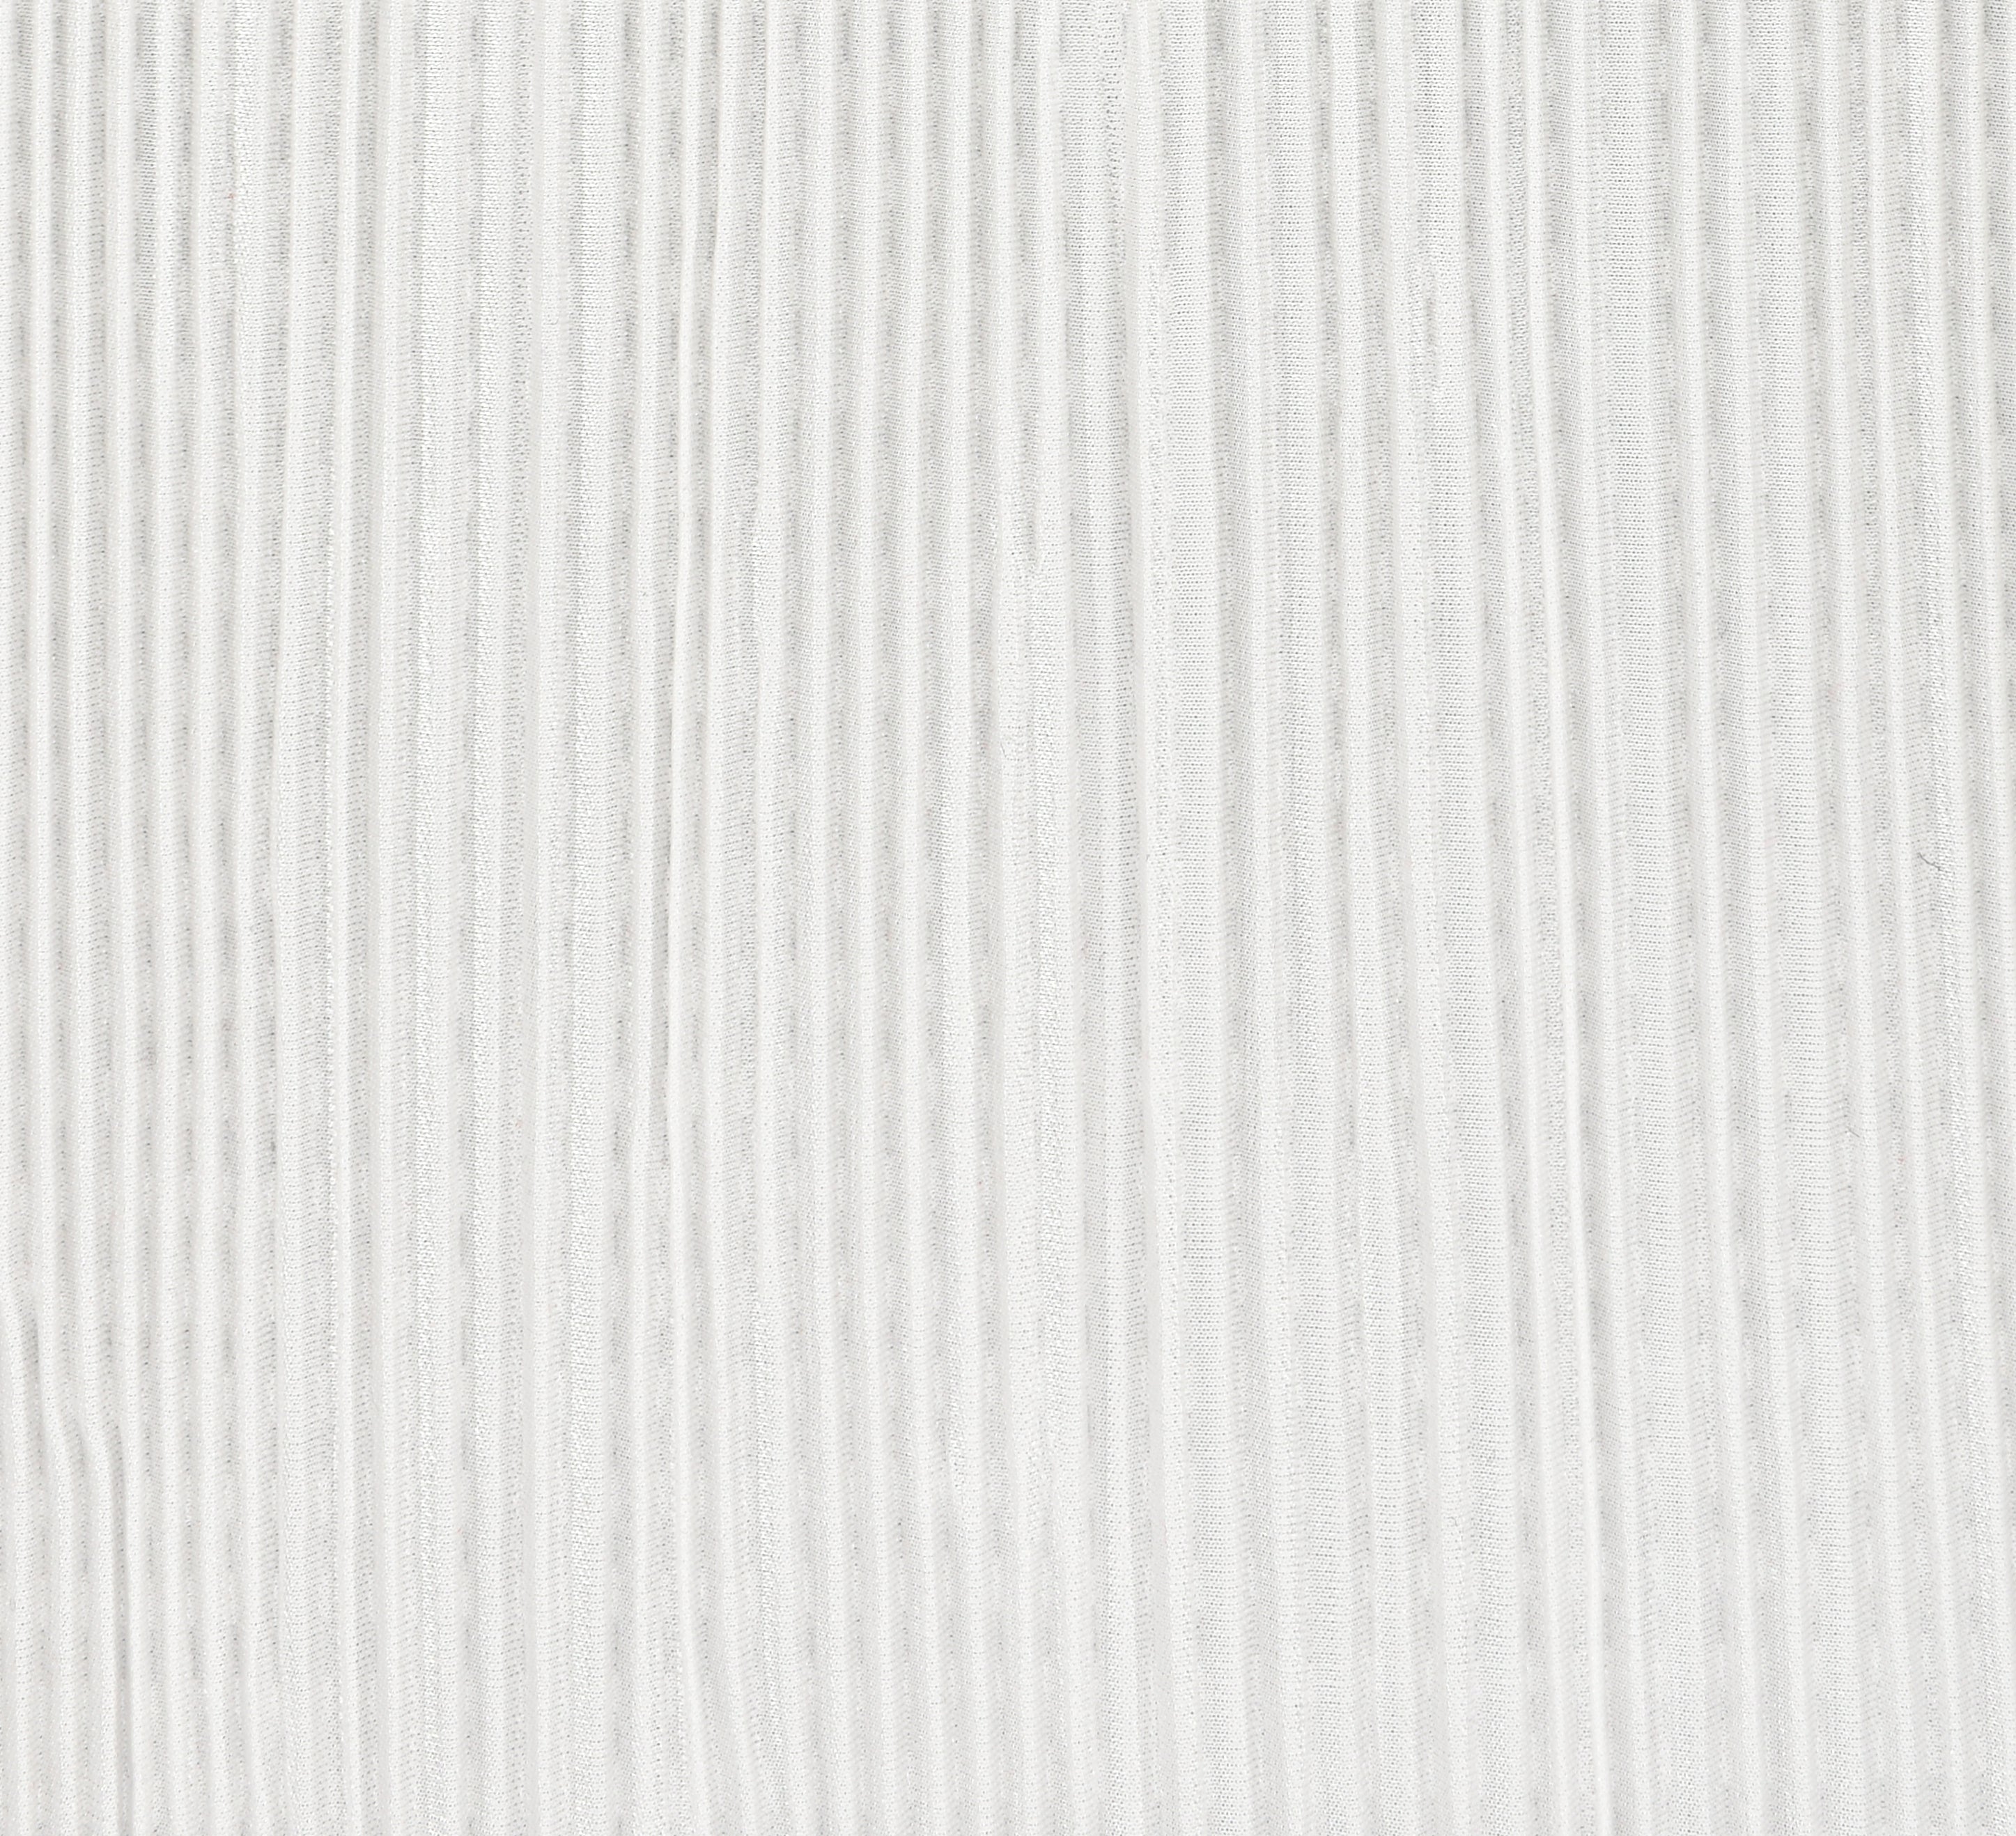 9761-06 Snow White Polyester Pleat Plain Dyed 100% 180g/yd 56" knit plain dyed pleat polyester white Solid Color, Pleat - knit fabric - woven fabric - fabric company - fabric wholesale - fabric b2b - fabric factory - high quality fabric - hong kong fabric - fabric hk - acetate fabric - cotton fabric - linen fabric - metallic fabric - nylon fabric - polyester fabric - spandex fabric - chun wing hing - cwh hk - fabric worldwide ship - 針織布 - 梳織布 - 布料公司- 布料批發 - 香港布料 - 秦榮興